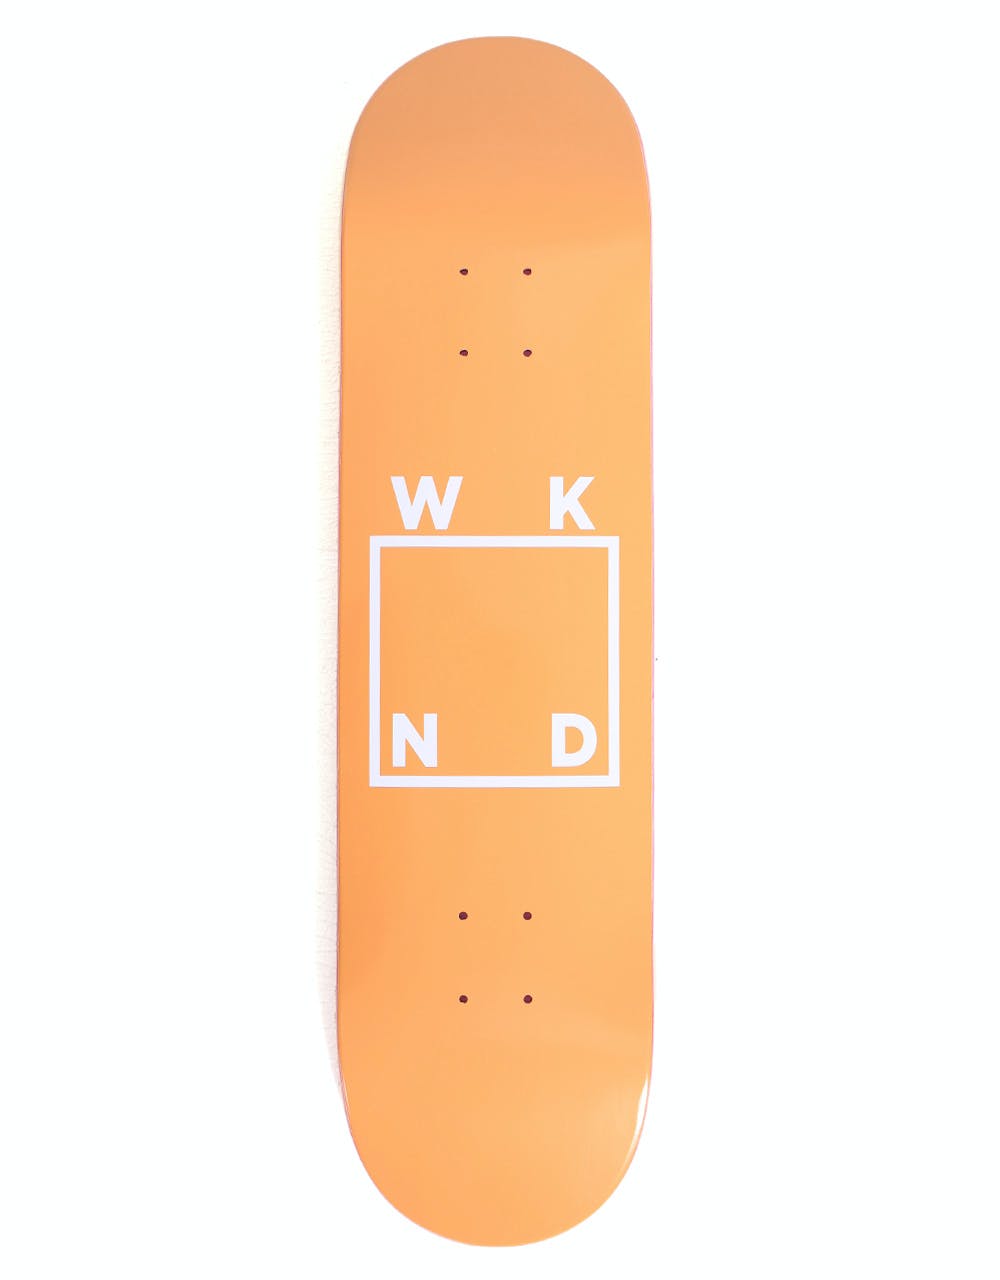 WKND Logo Skateboard Deck - 8"